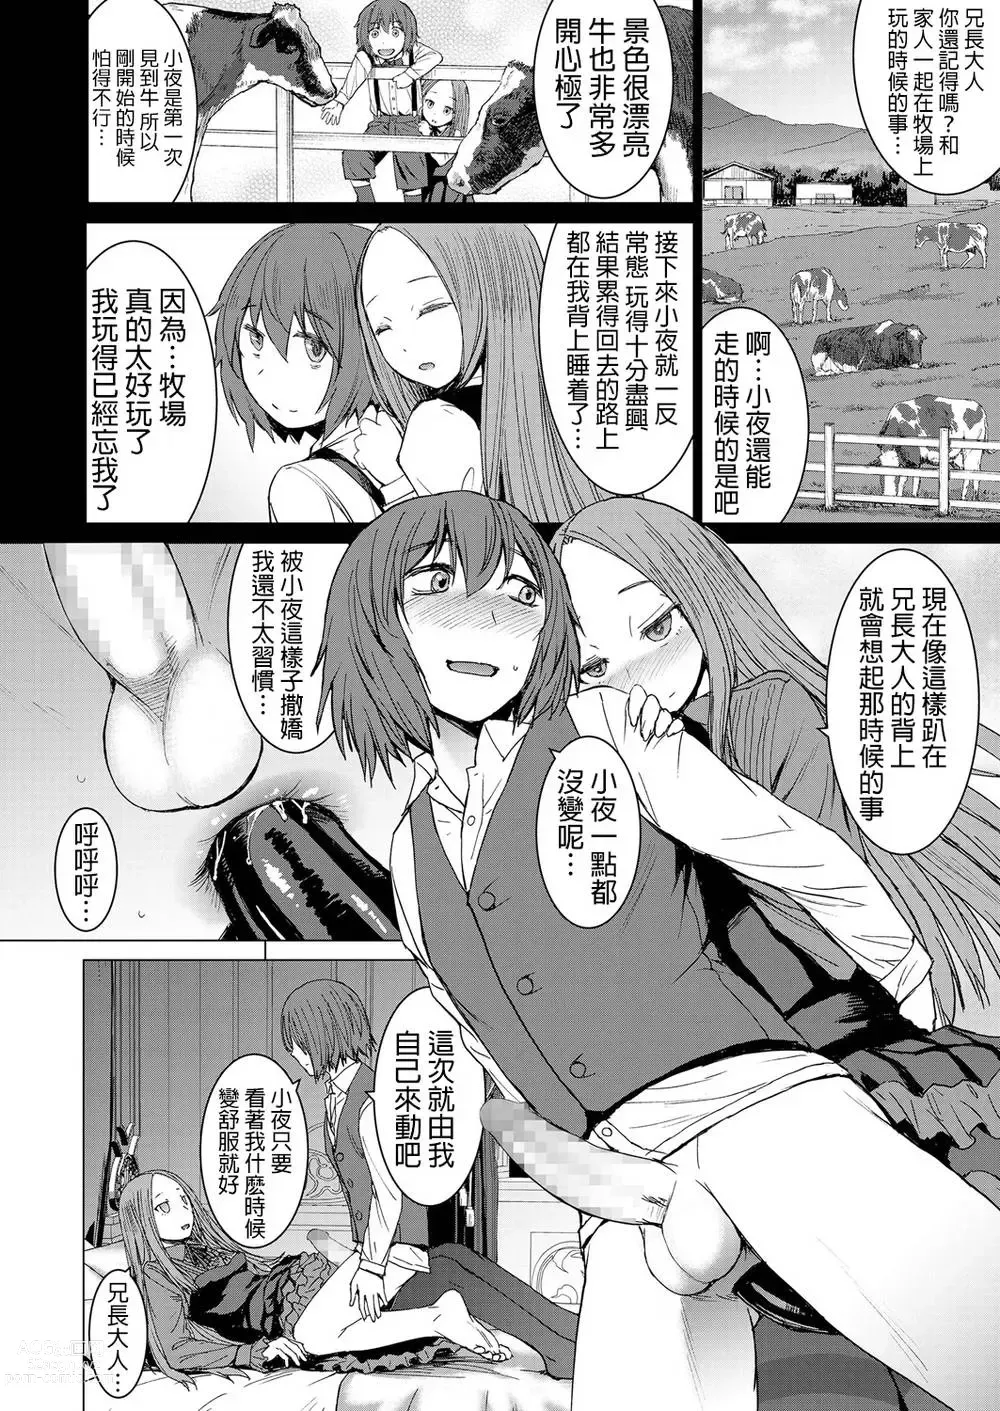 Page 22 of manga Aisarete Miru?